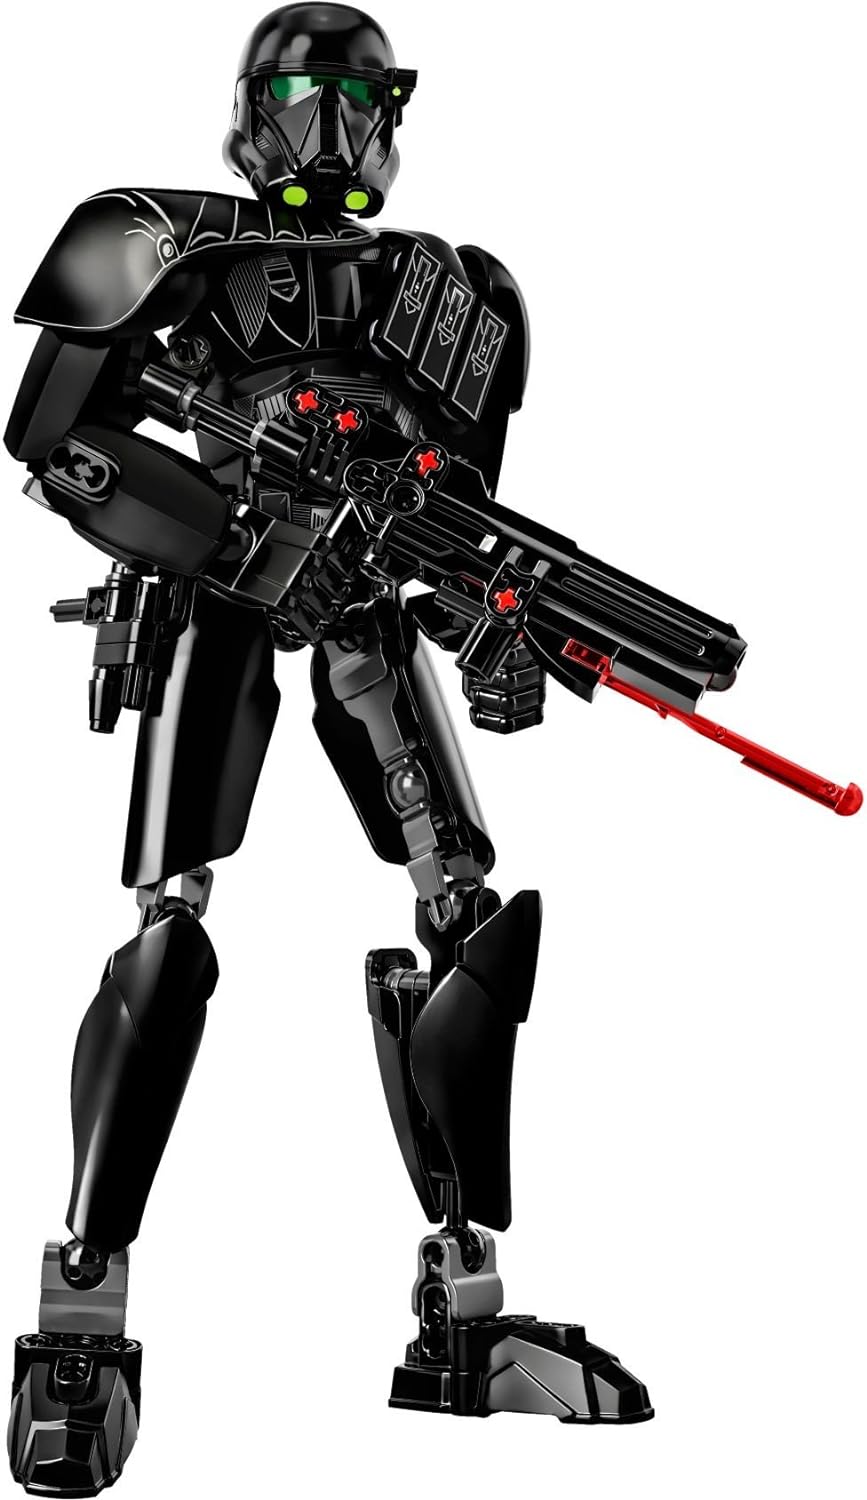 Model Kit Réplica Action Figure Imperial Death Troop: Star Wars 26cm 106 Peças Lego Black Friday - MKP